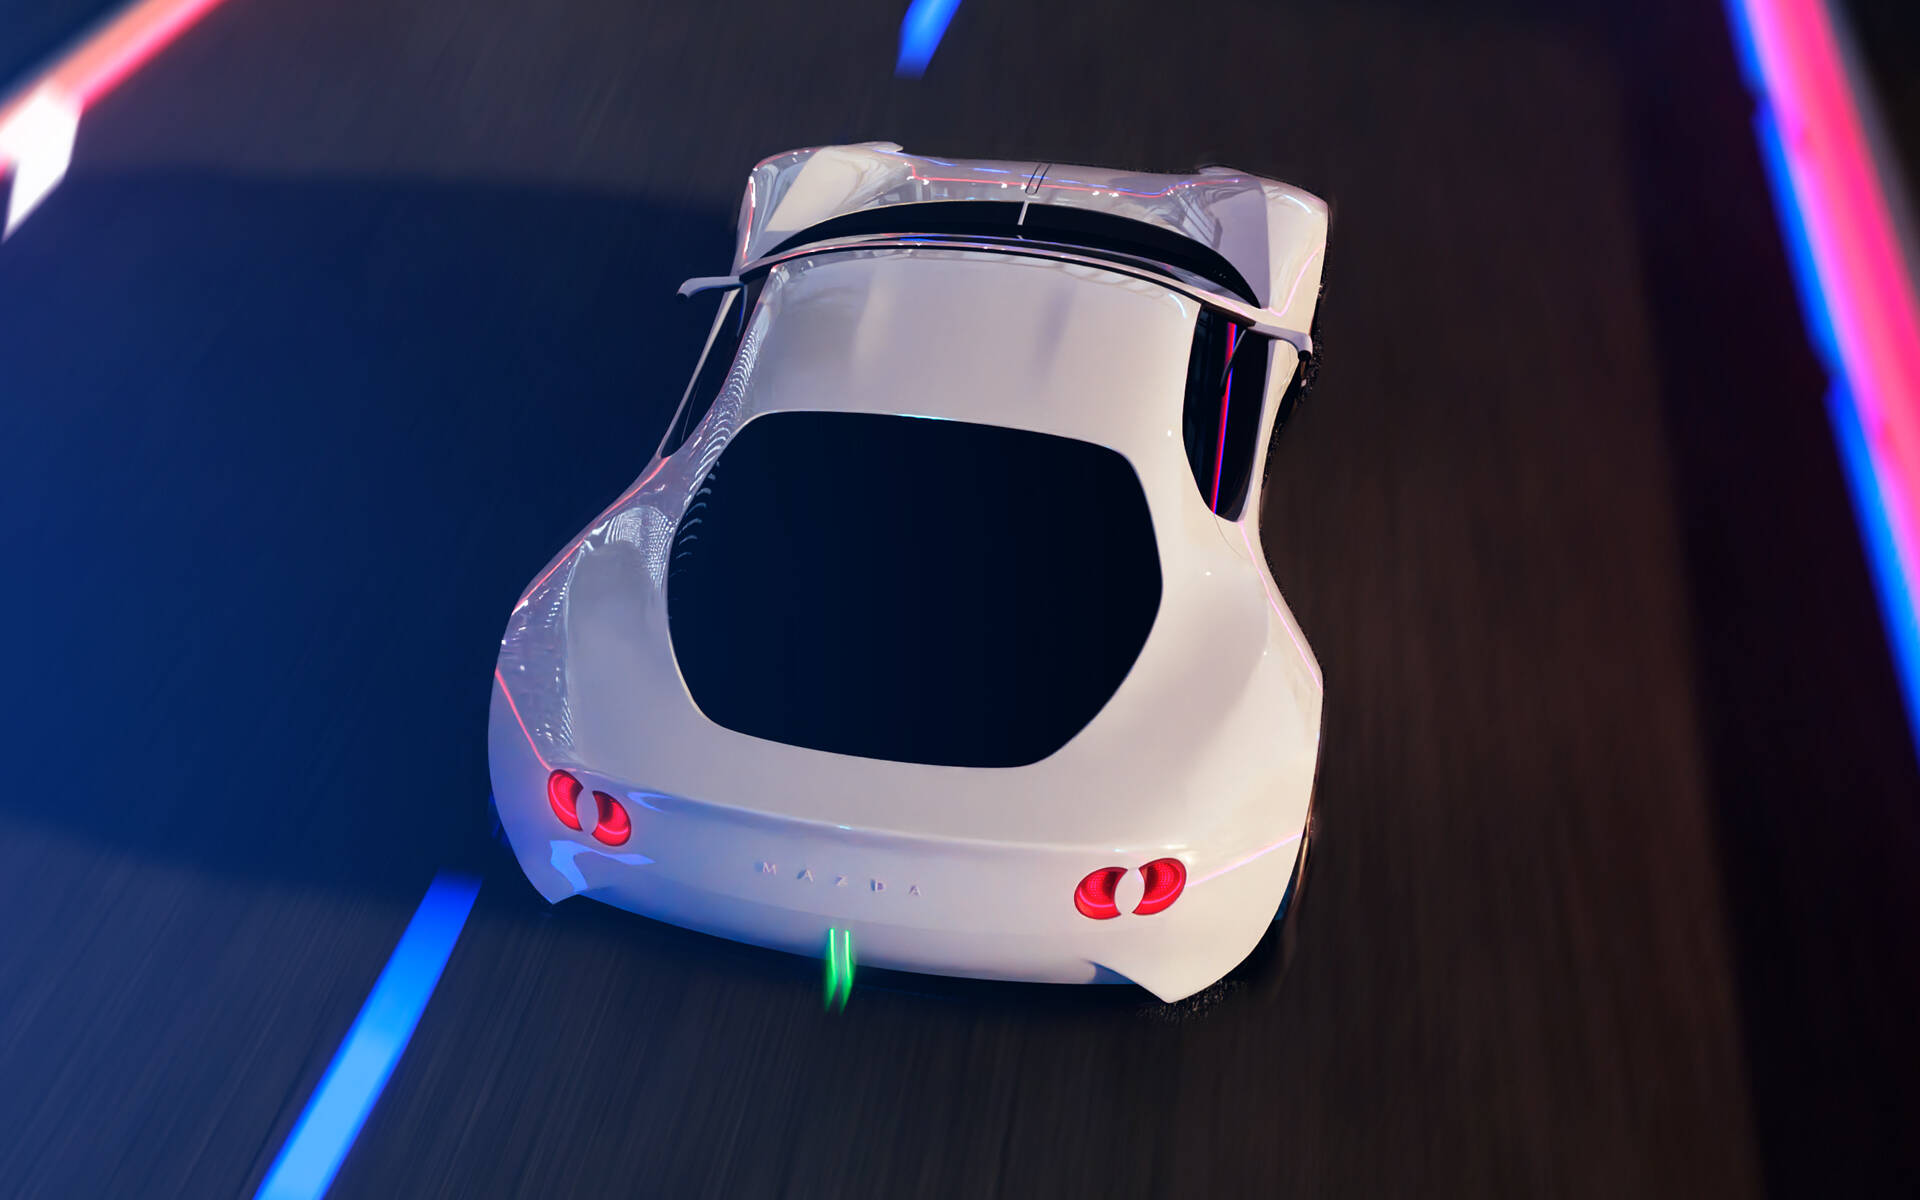 Mazda Vision Study : un aperçu d’une future MX-5 électrique ? 551551-mazda-vision-study-un-apercu-d-une-future-mx-5-electrique